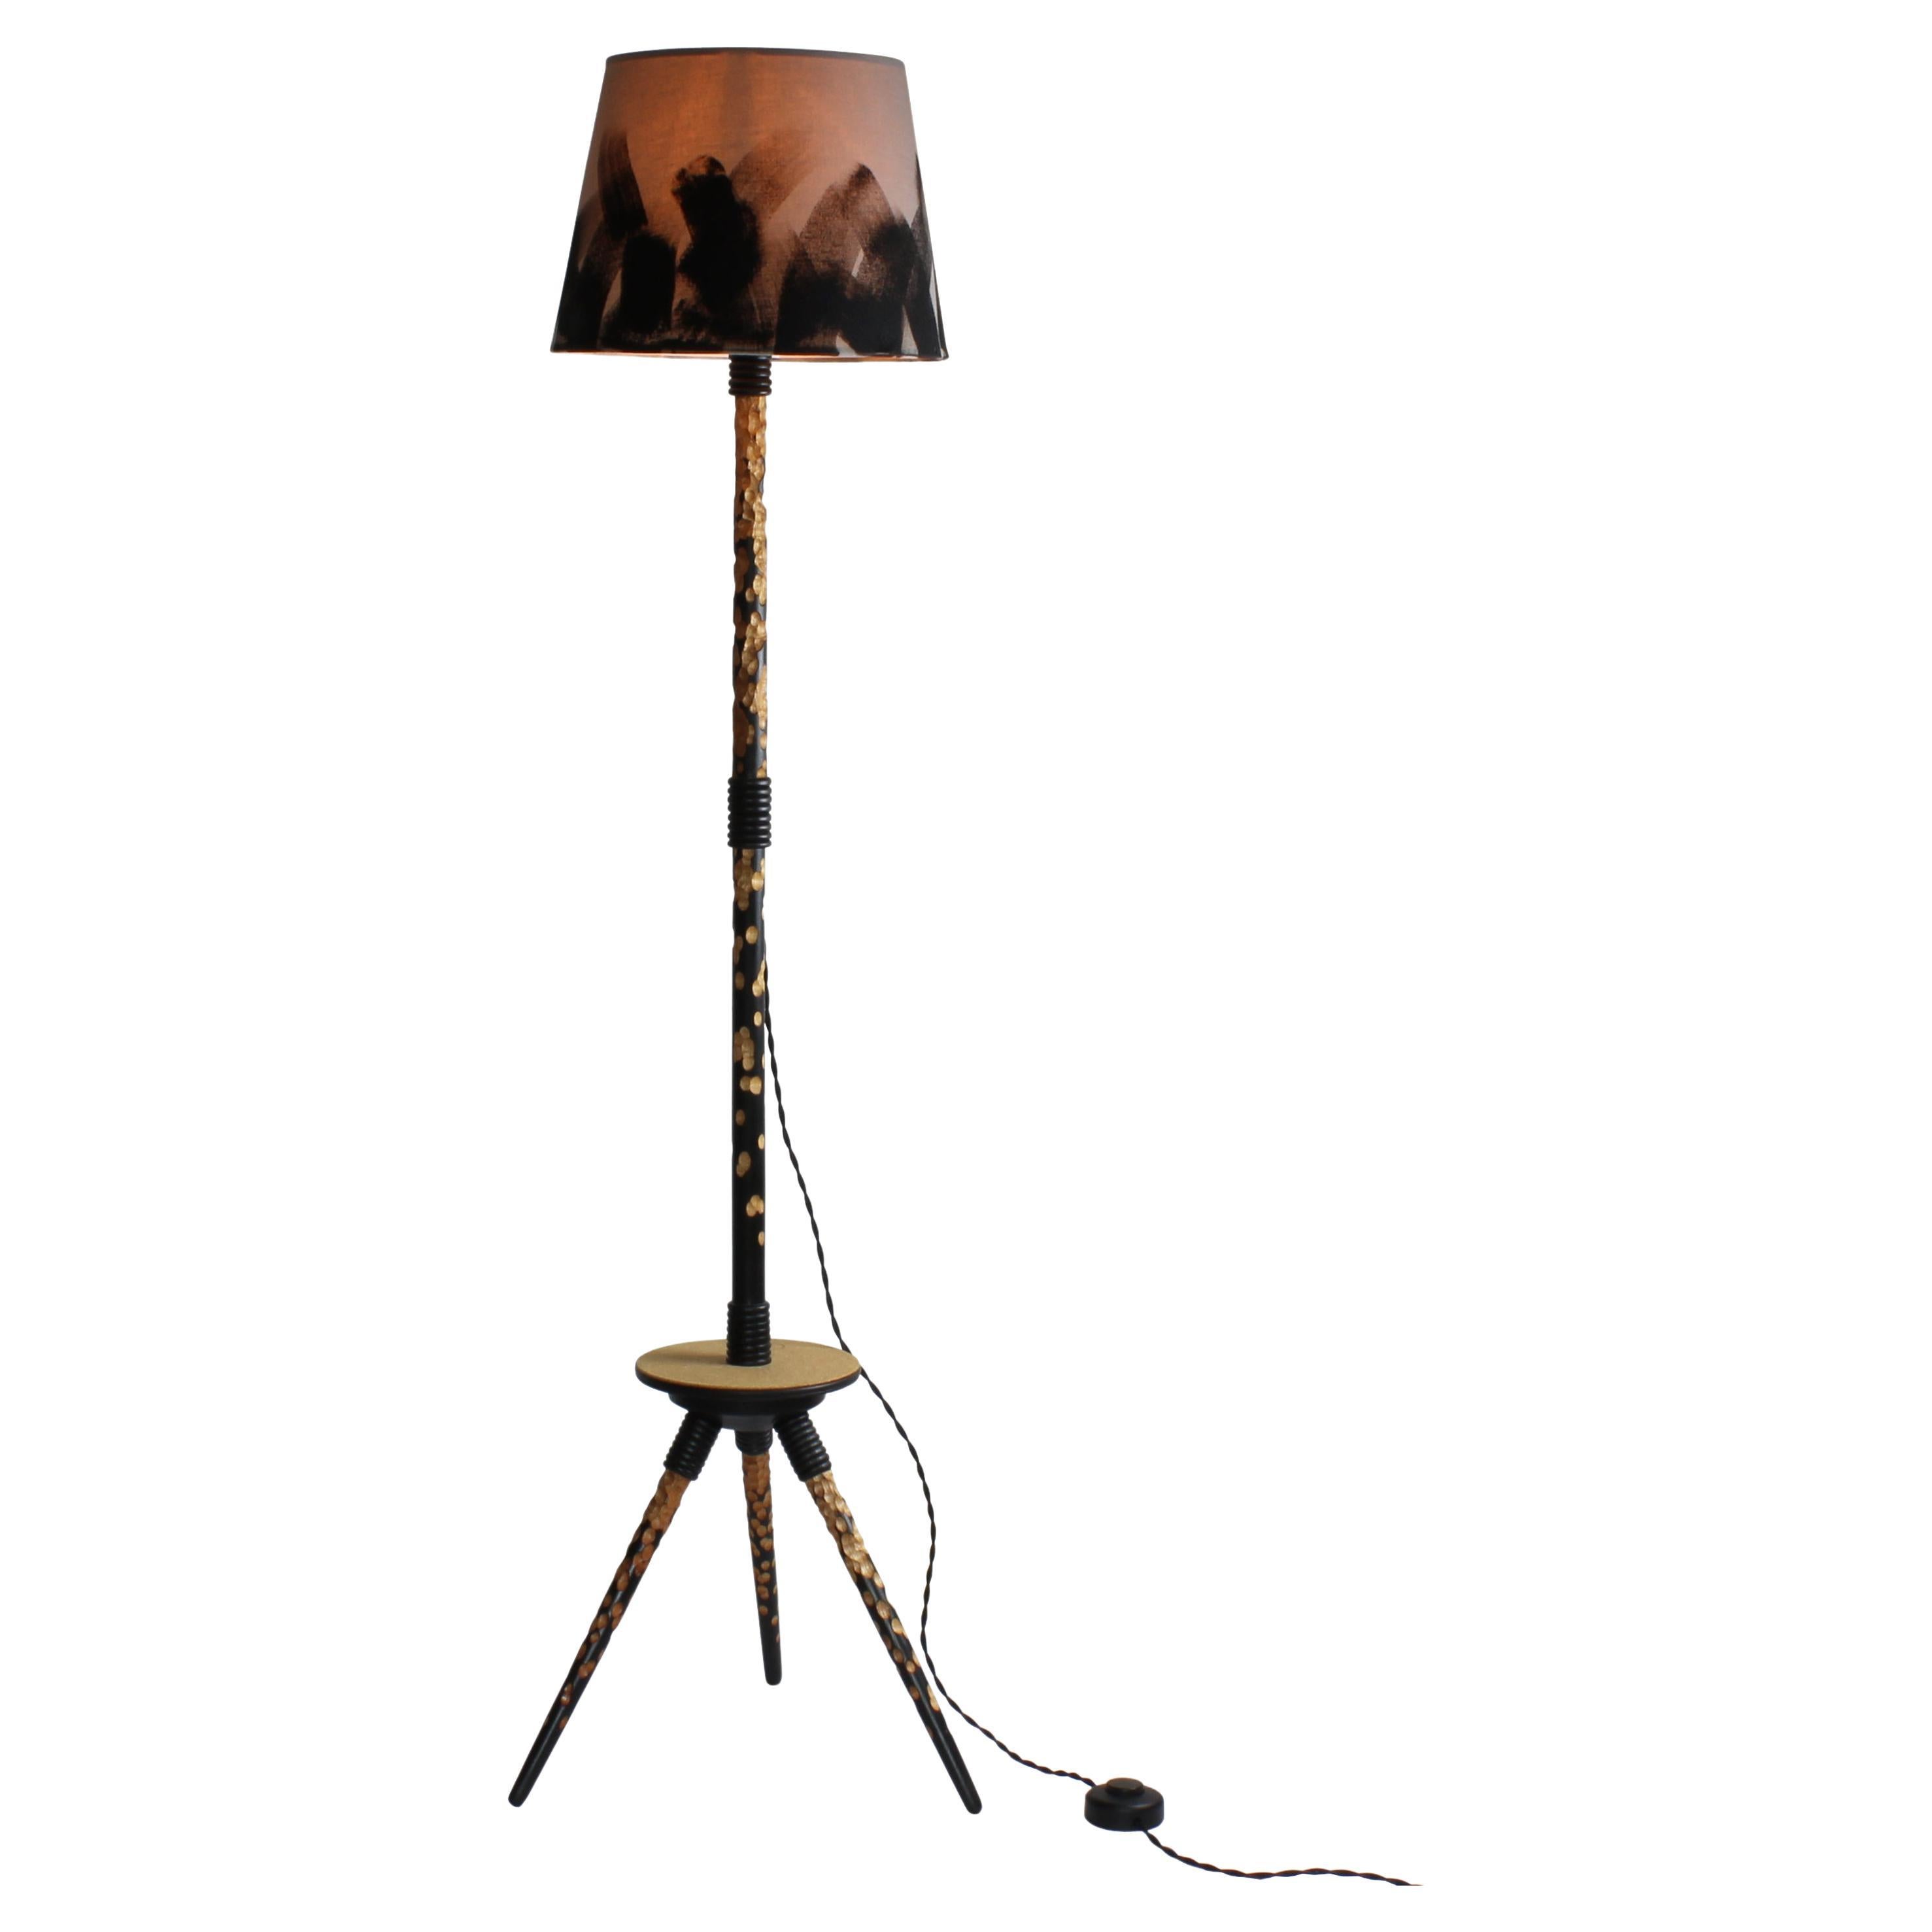 Rocket, Unique Sculptural Lighting, Floor Lamp from Reclaimed Burned Wood For Sale